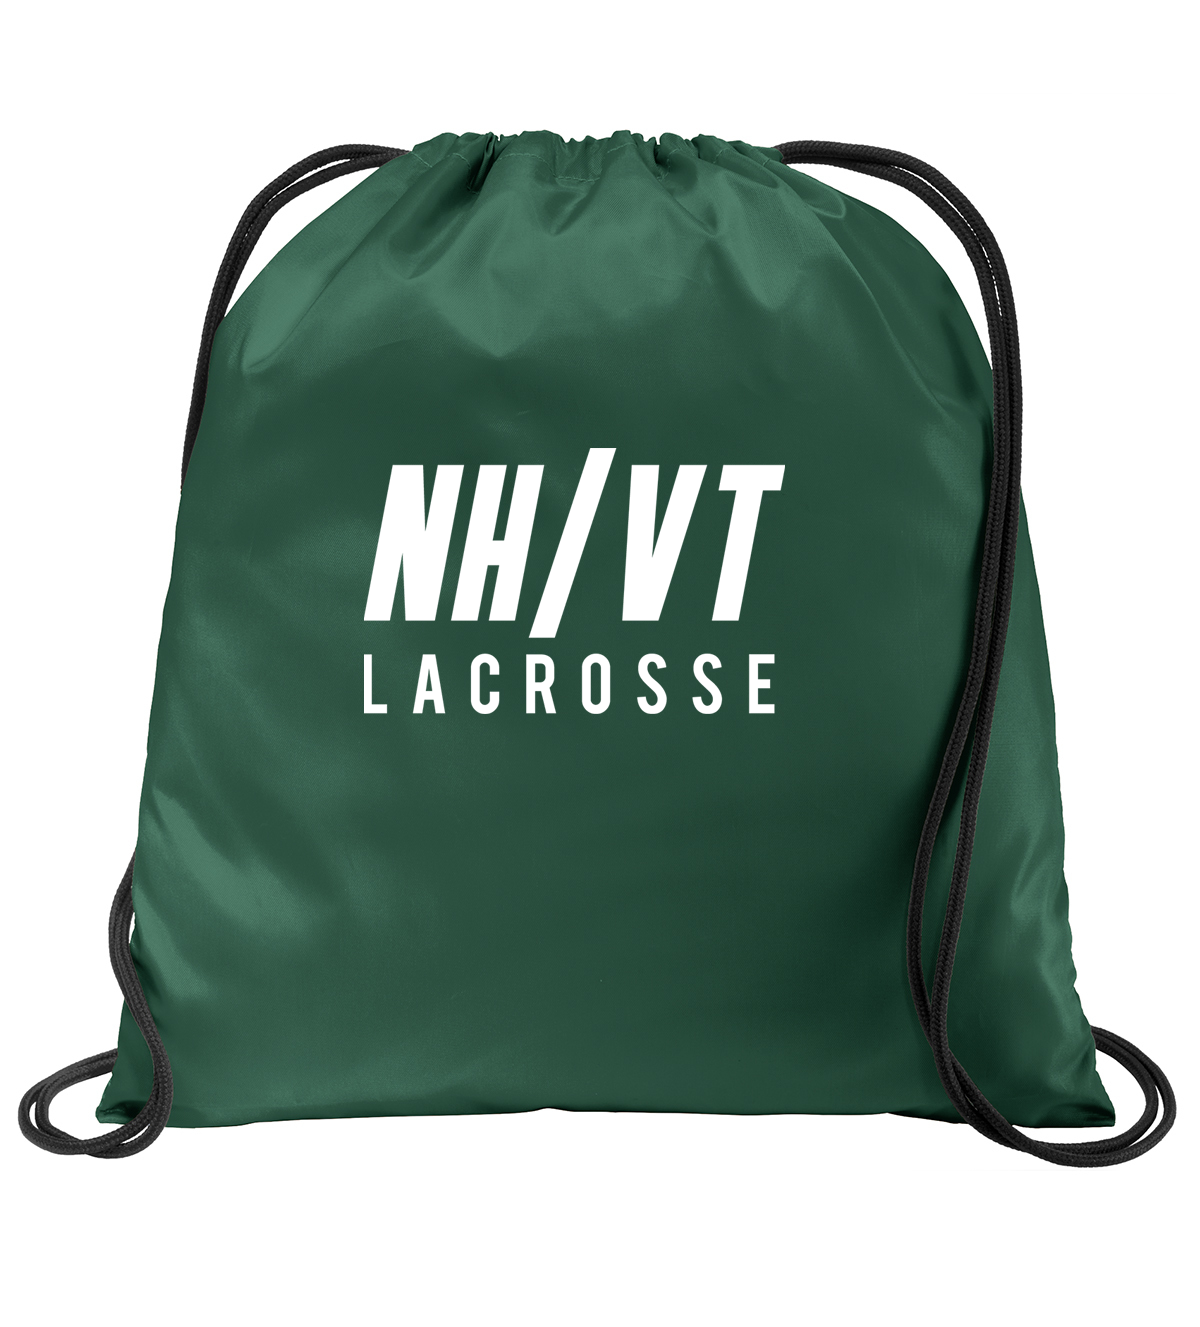 NH/VT Lacrosse Cinch Pack